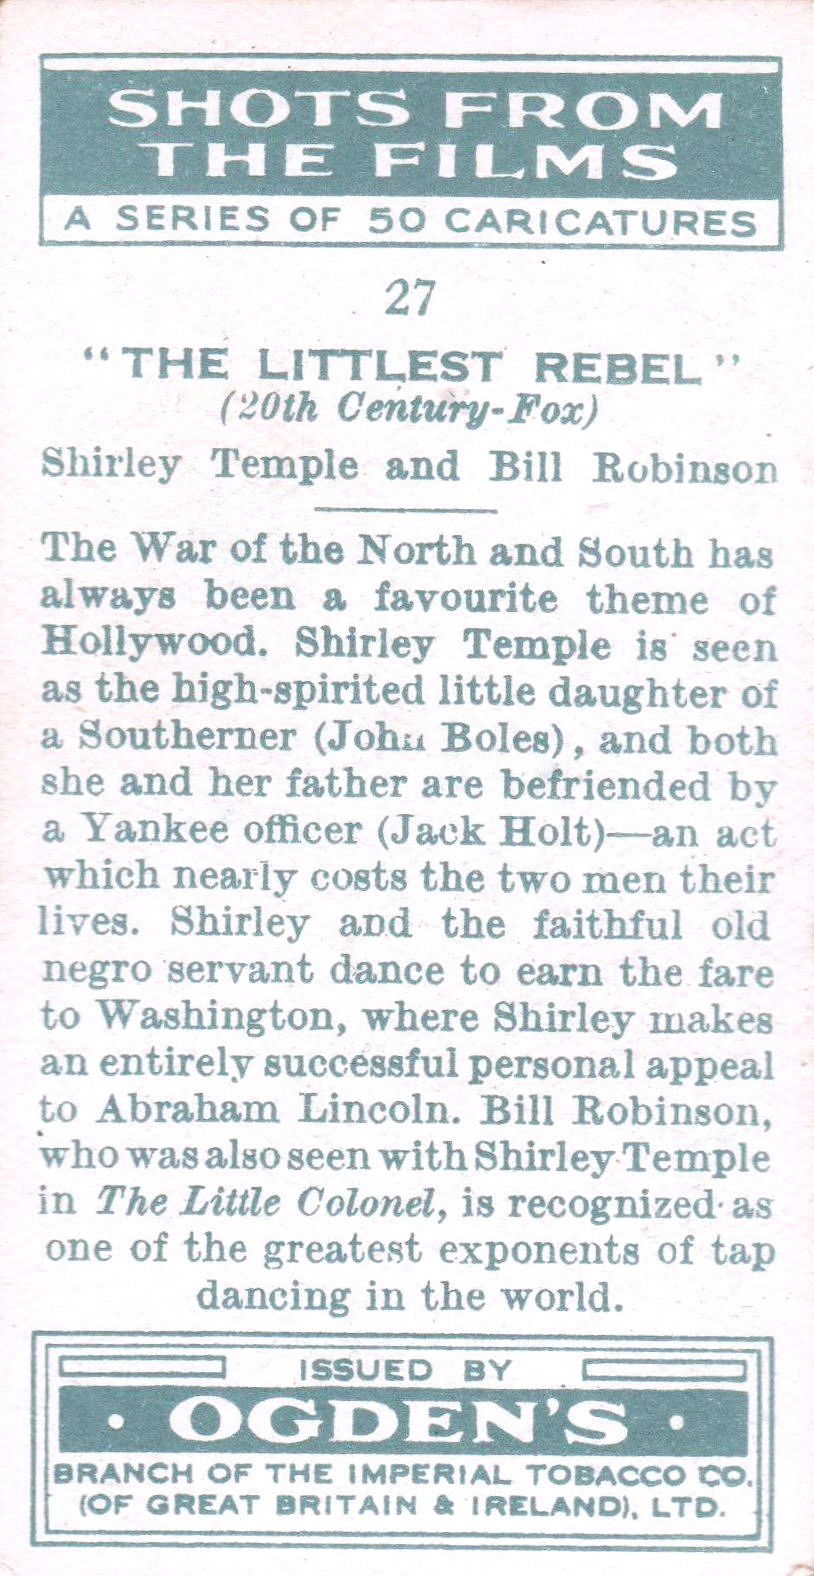 " THE LITTLEST REBEL " SHIRLEY TEMPLE - BILL ROBINSON